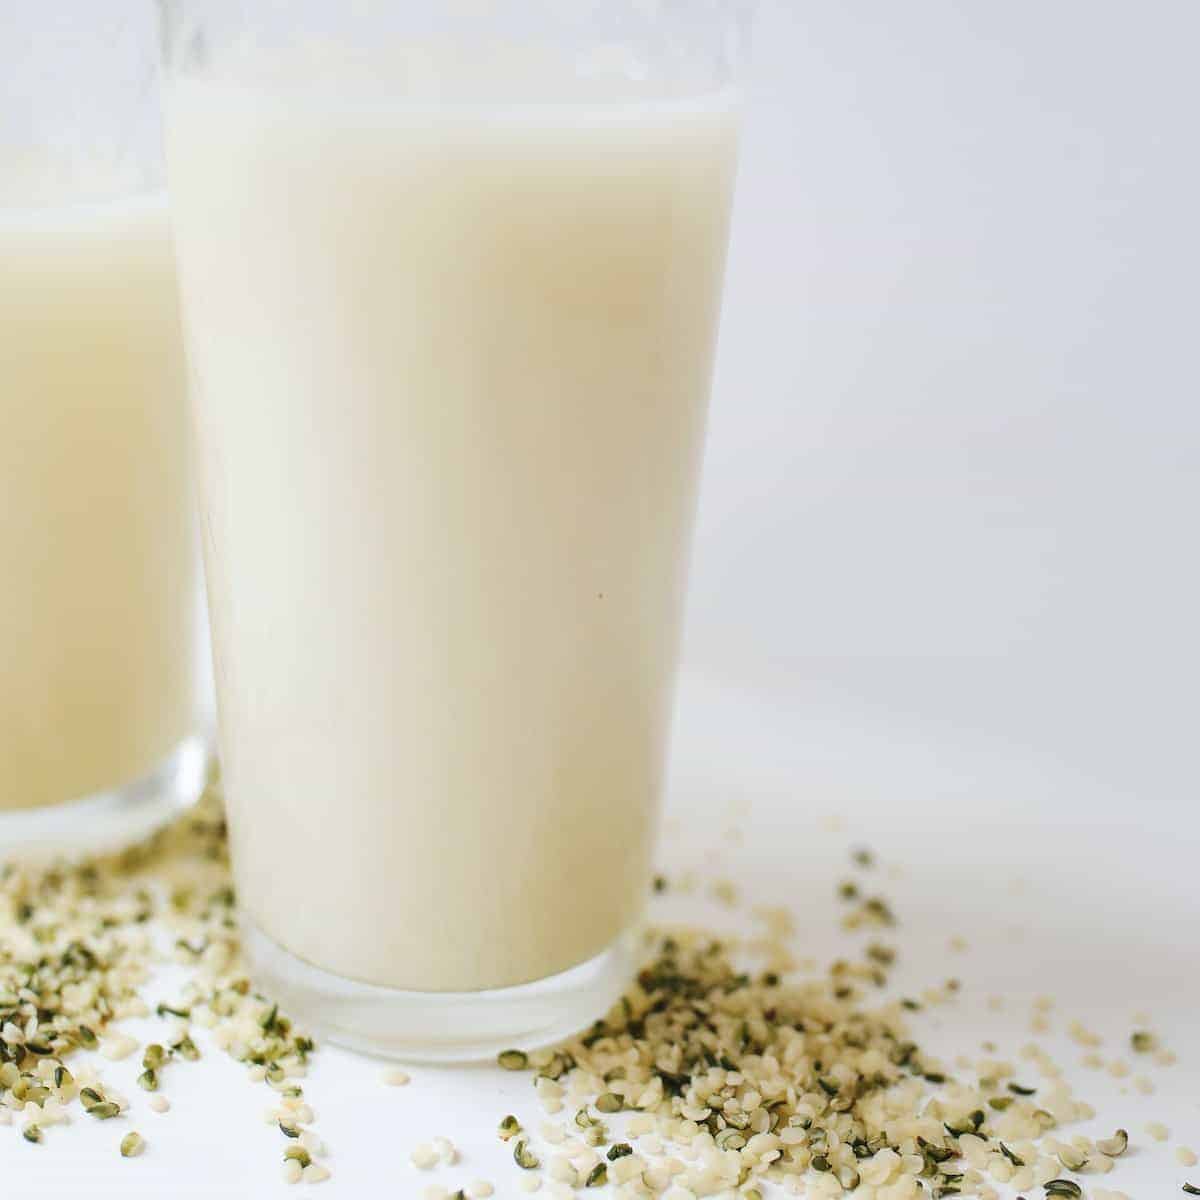 Powdered hemp and milk in a transparent glass